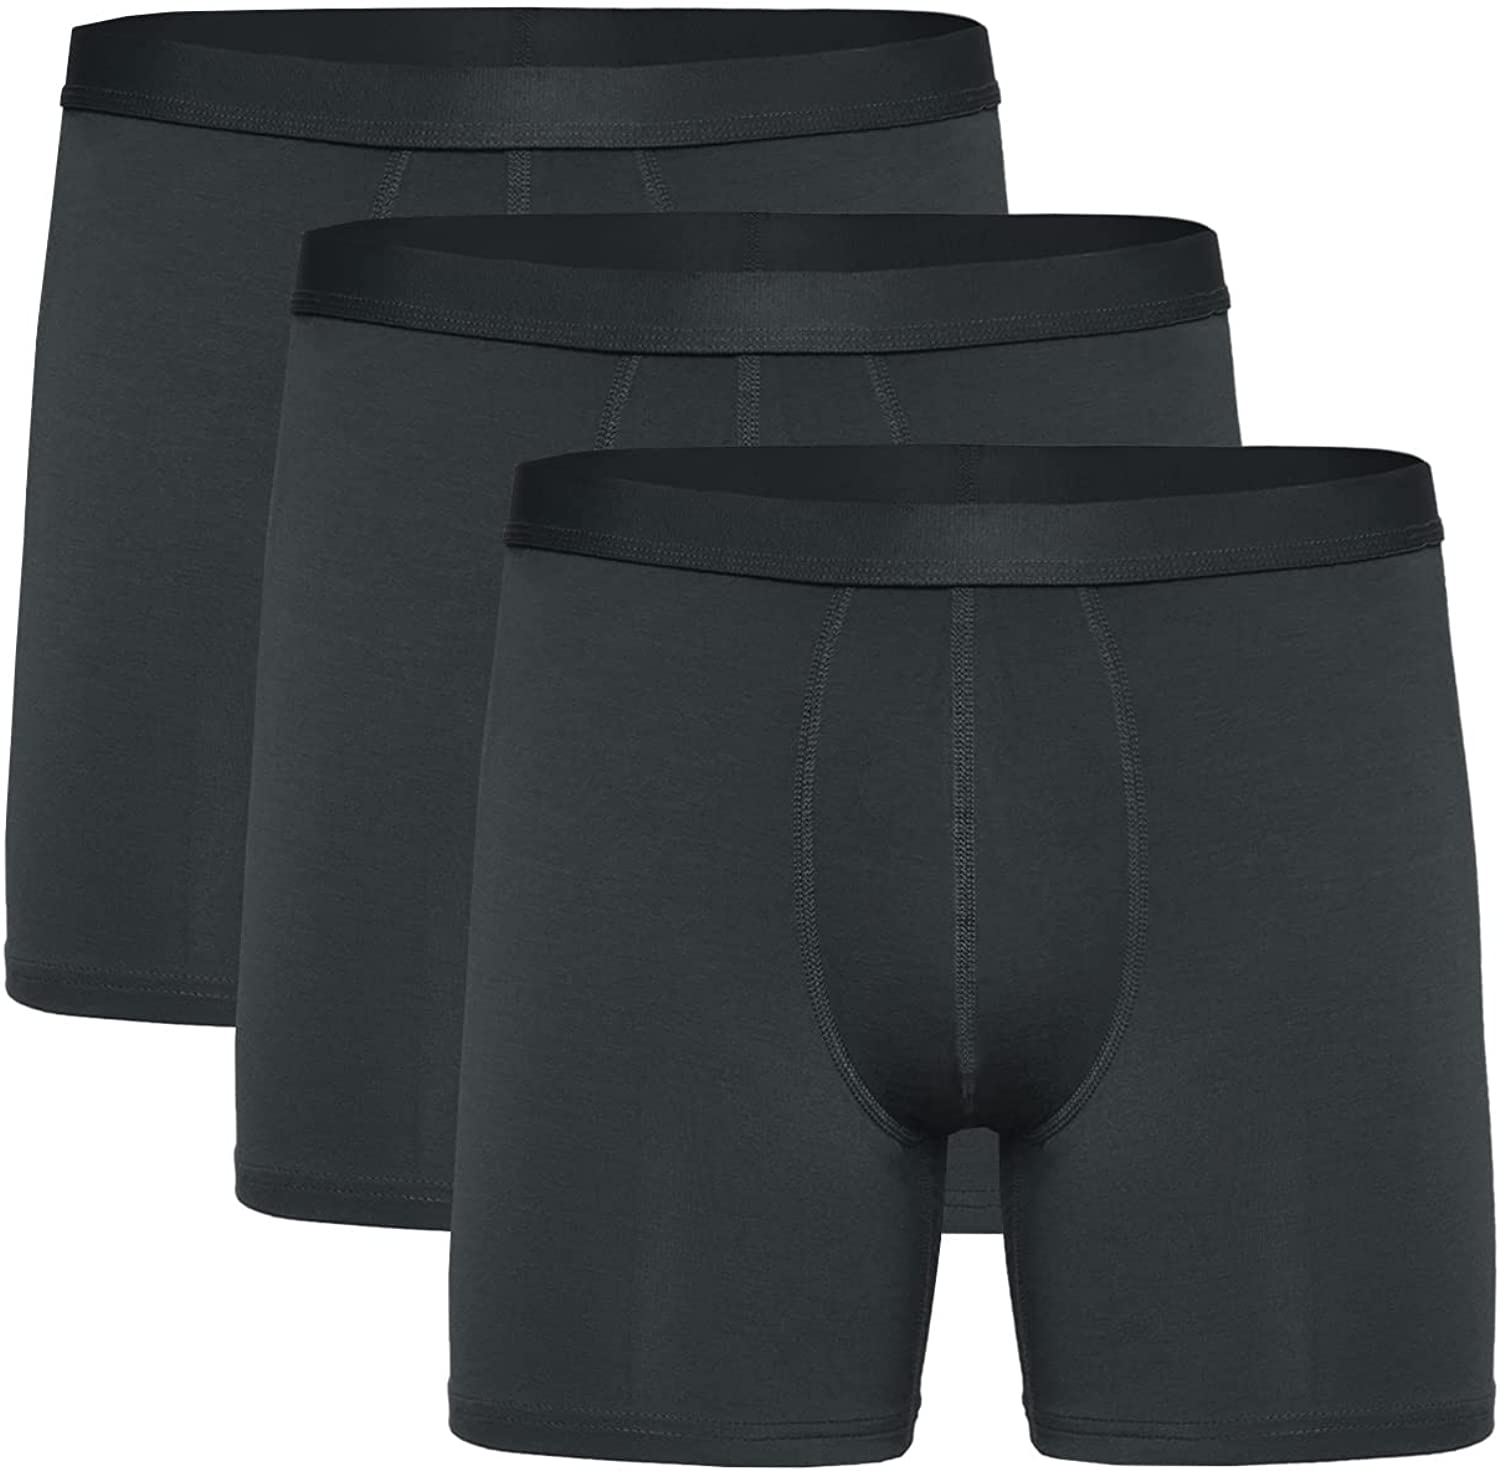 True Classic Men's Underwear Boxer Briefs, Ultra-Soft, Modern Fit (3 Pack)